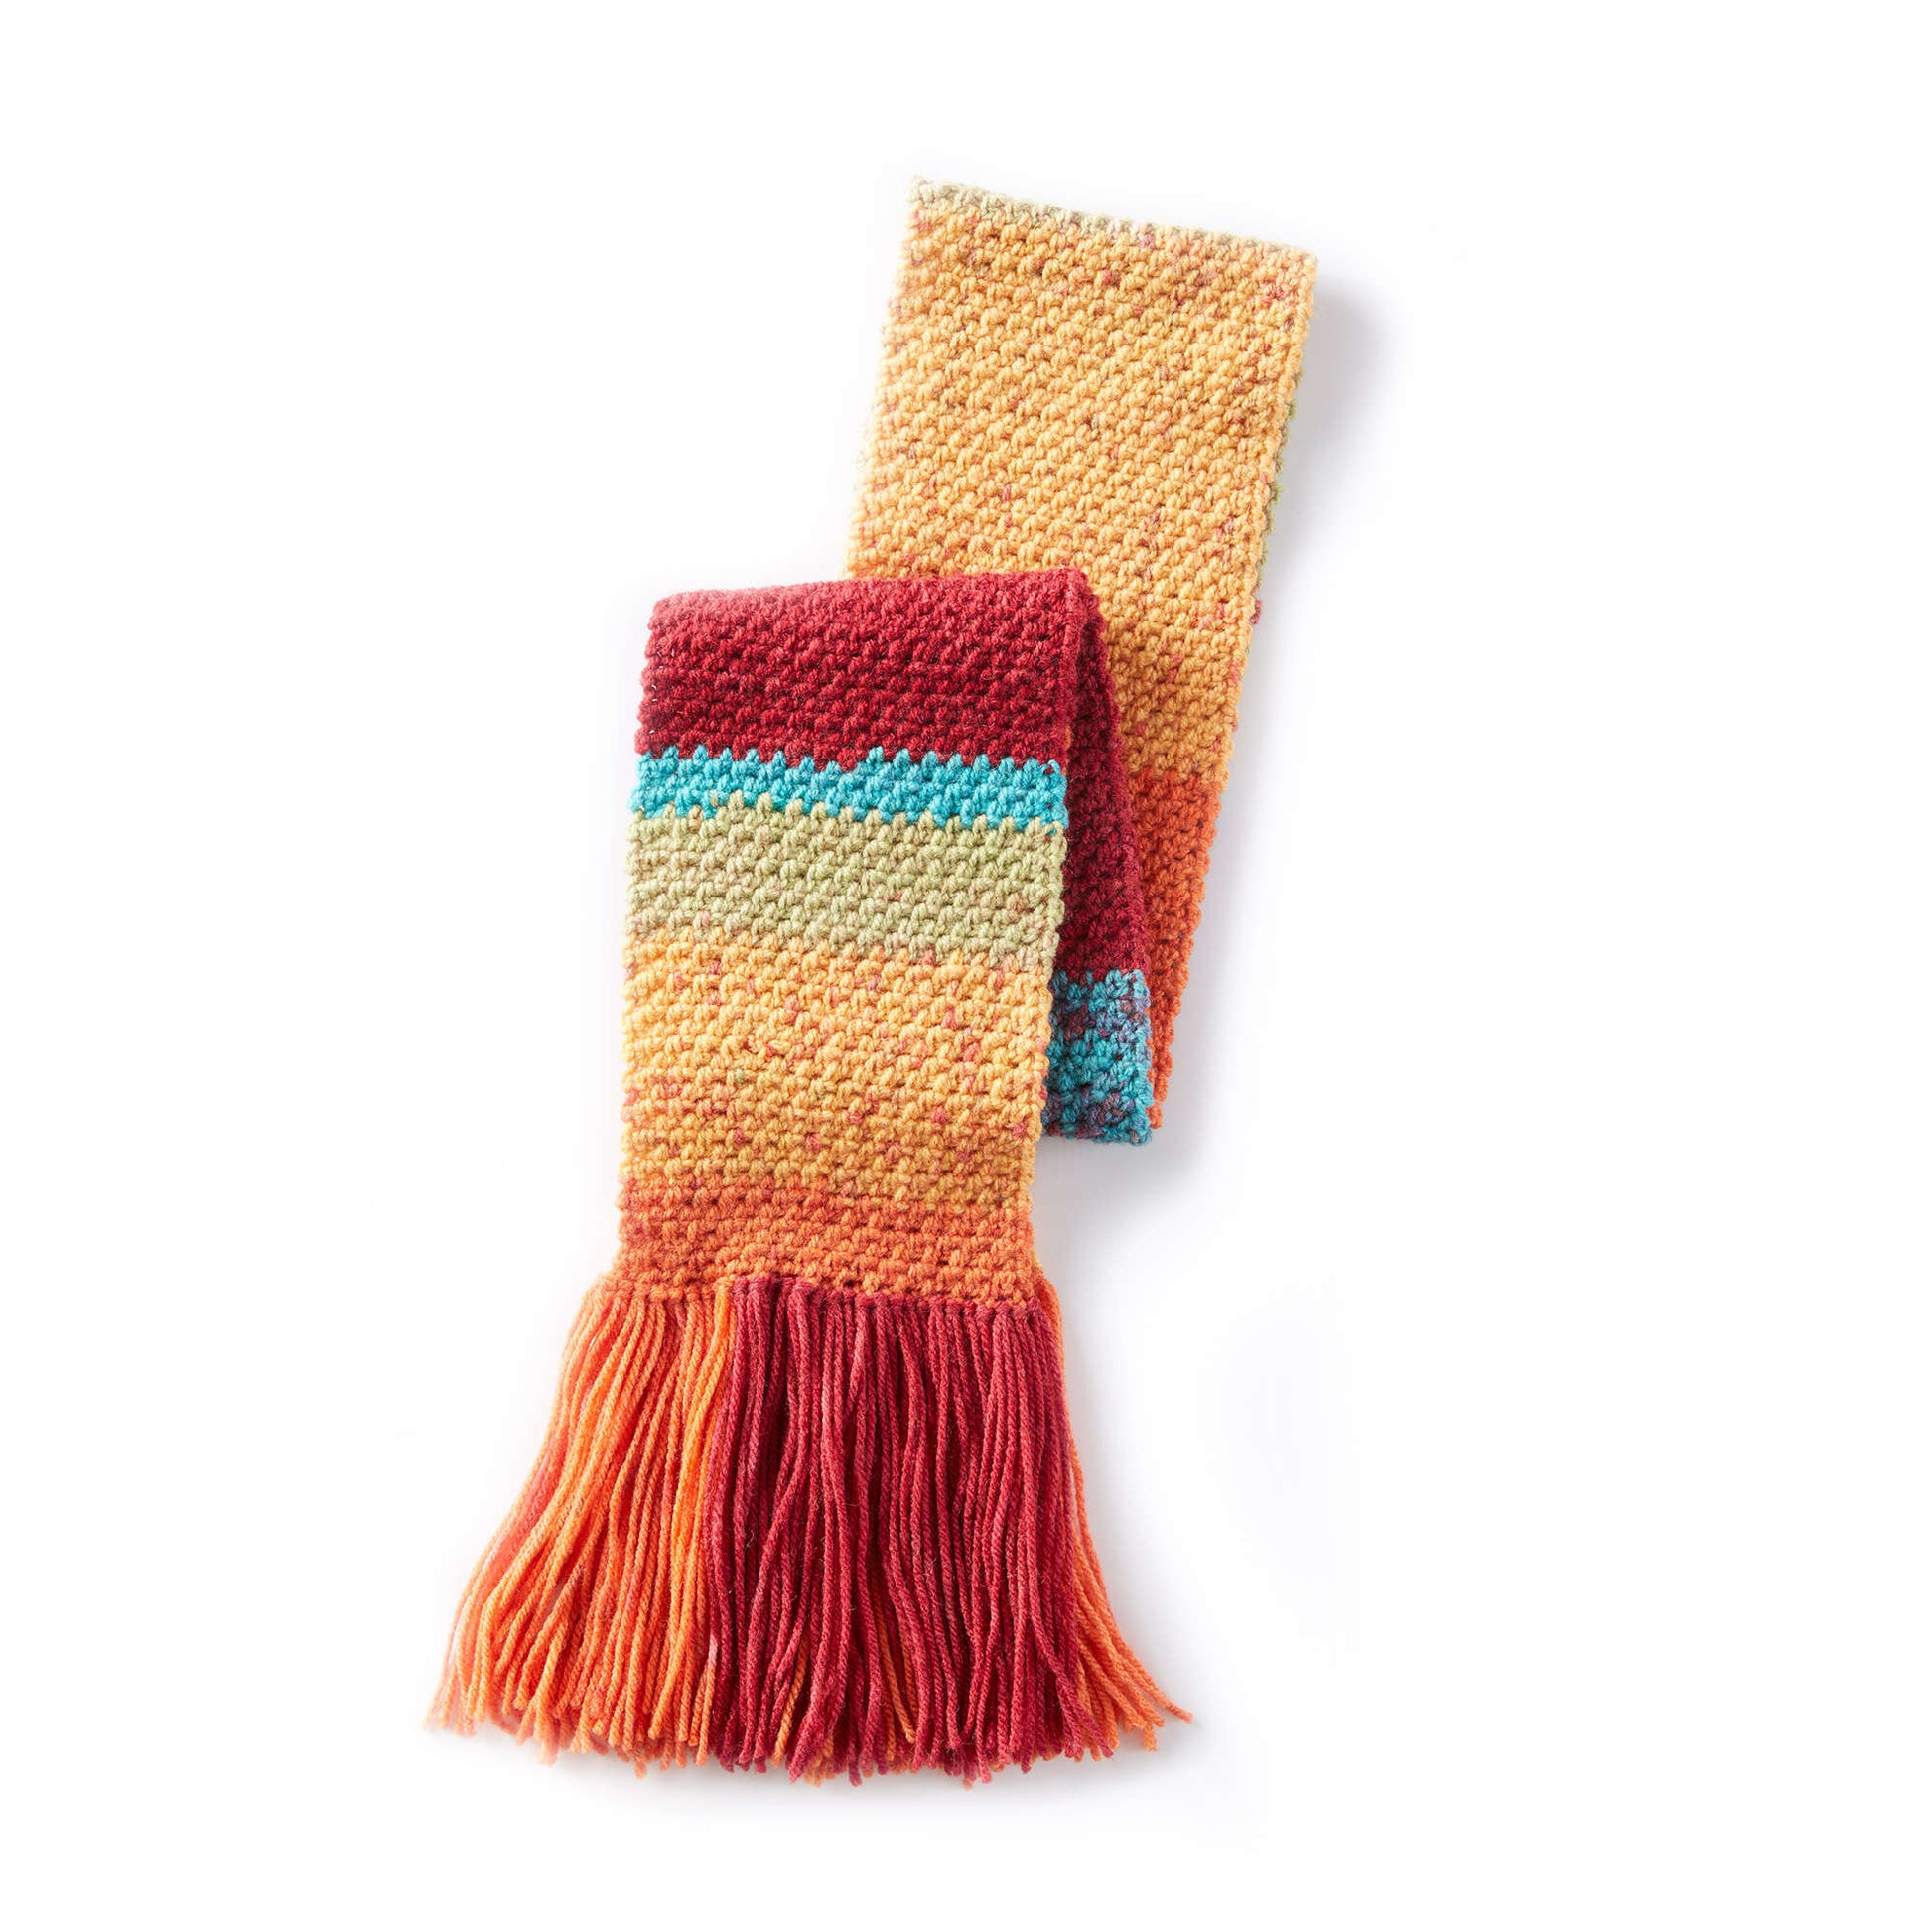 Caron Simple Texture Crochet Scarf Single Size